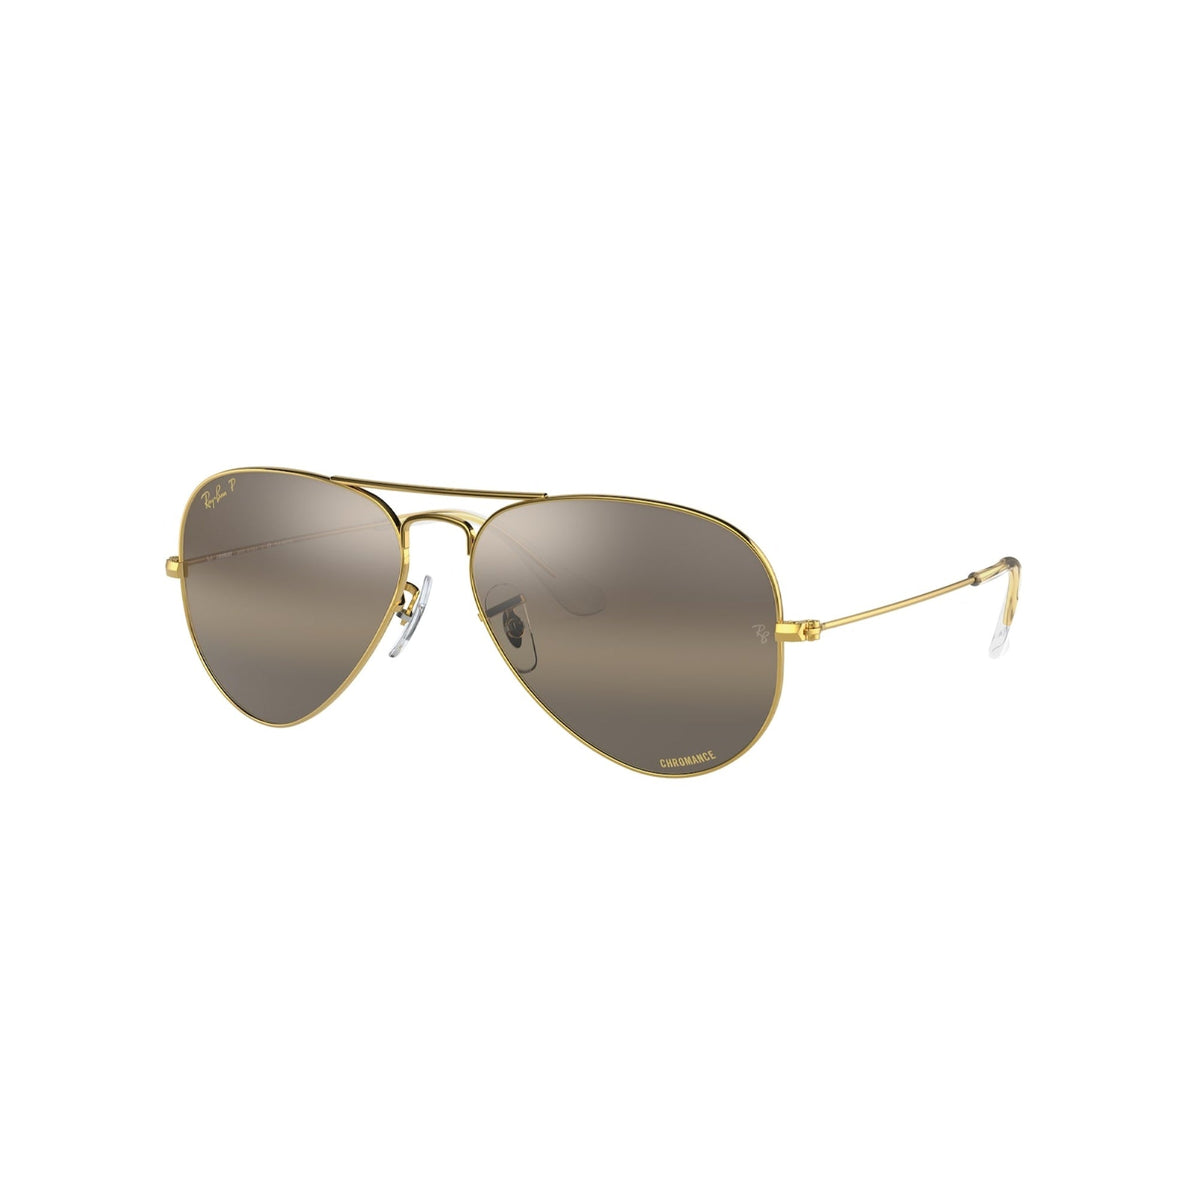 Ray-Ban Unisex Sunglasses Aviator large Metal Gold Polar Clear Gradient Dark Brown Metal Metal  0RB3025 9196G5 62